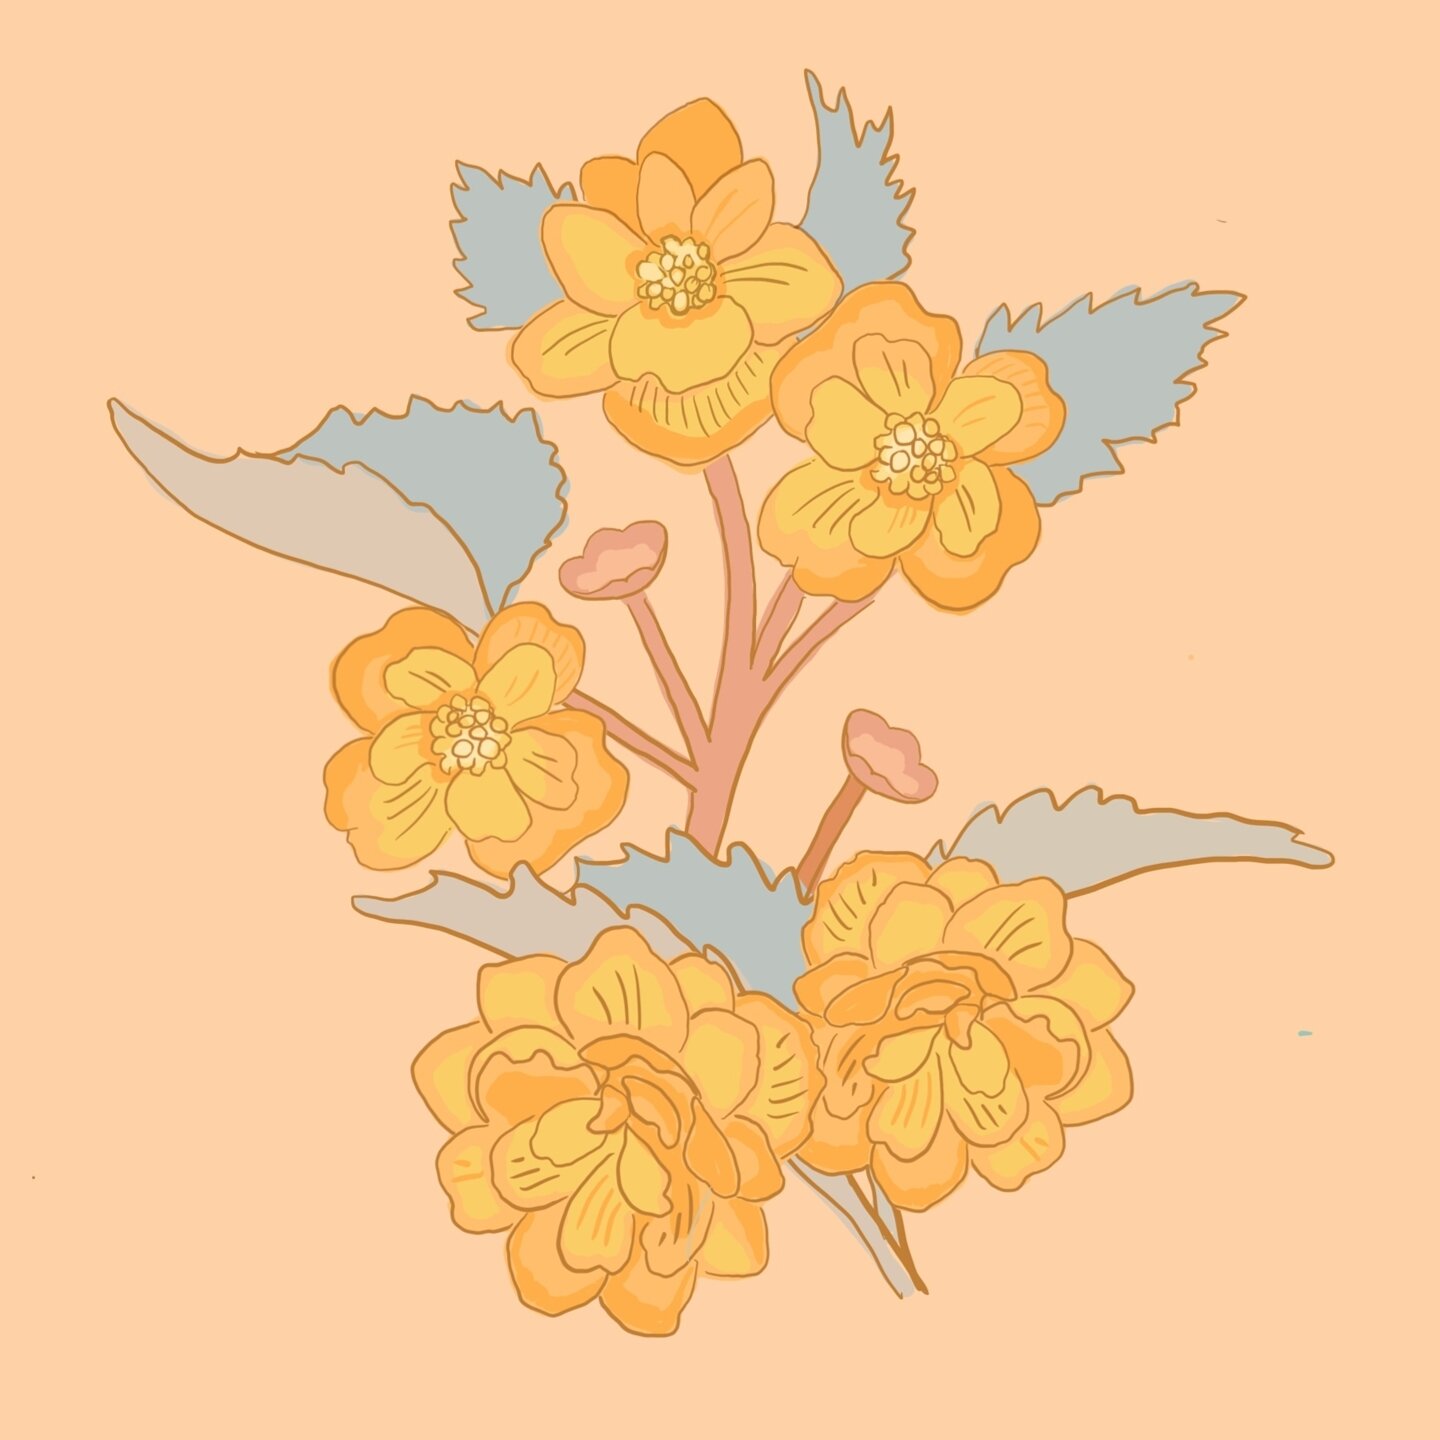 .
. 
. 
.
.
#begonia #begonias #floraldesign #floralart #floralillustration #surfacedesign #flower #flowers #procreate #procreateillustration